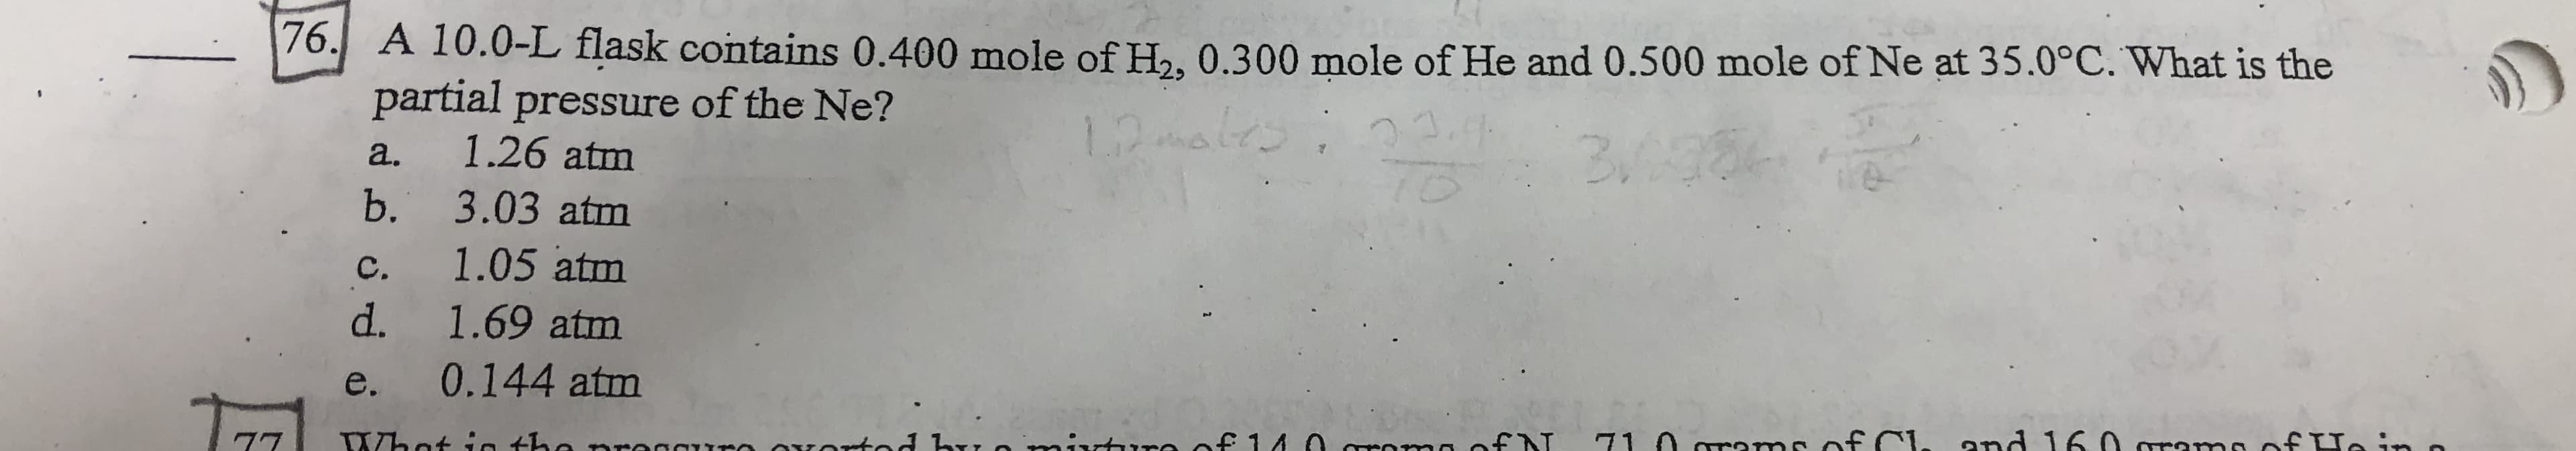 76
A
10.0-L
fask
contains
0.400
mole of Ha, 0.300 mole of He and 0.500 mole of Ne at 35.09C. What is the
76, A 10.0-L flask contains 0.400 mole of H, 0.300 mole of He and 0.500 mole of Ne at 35.0°C. What is the
partial pressure of the Ne?
a. 1.26 atm
b. 3.03 atm
c. 1.05 atm
d. 1.69 atm
e. 0.144 atm
